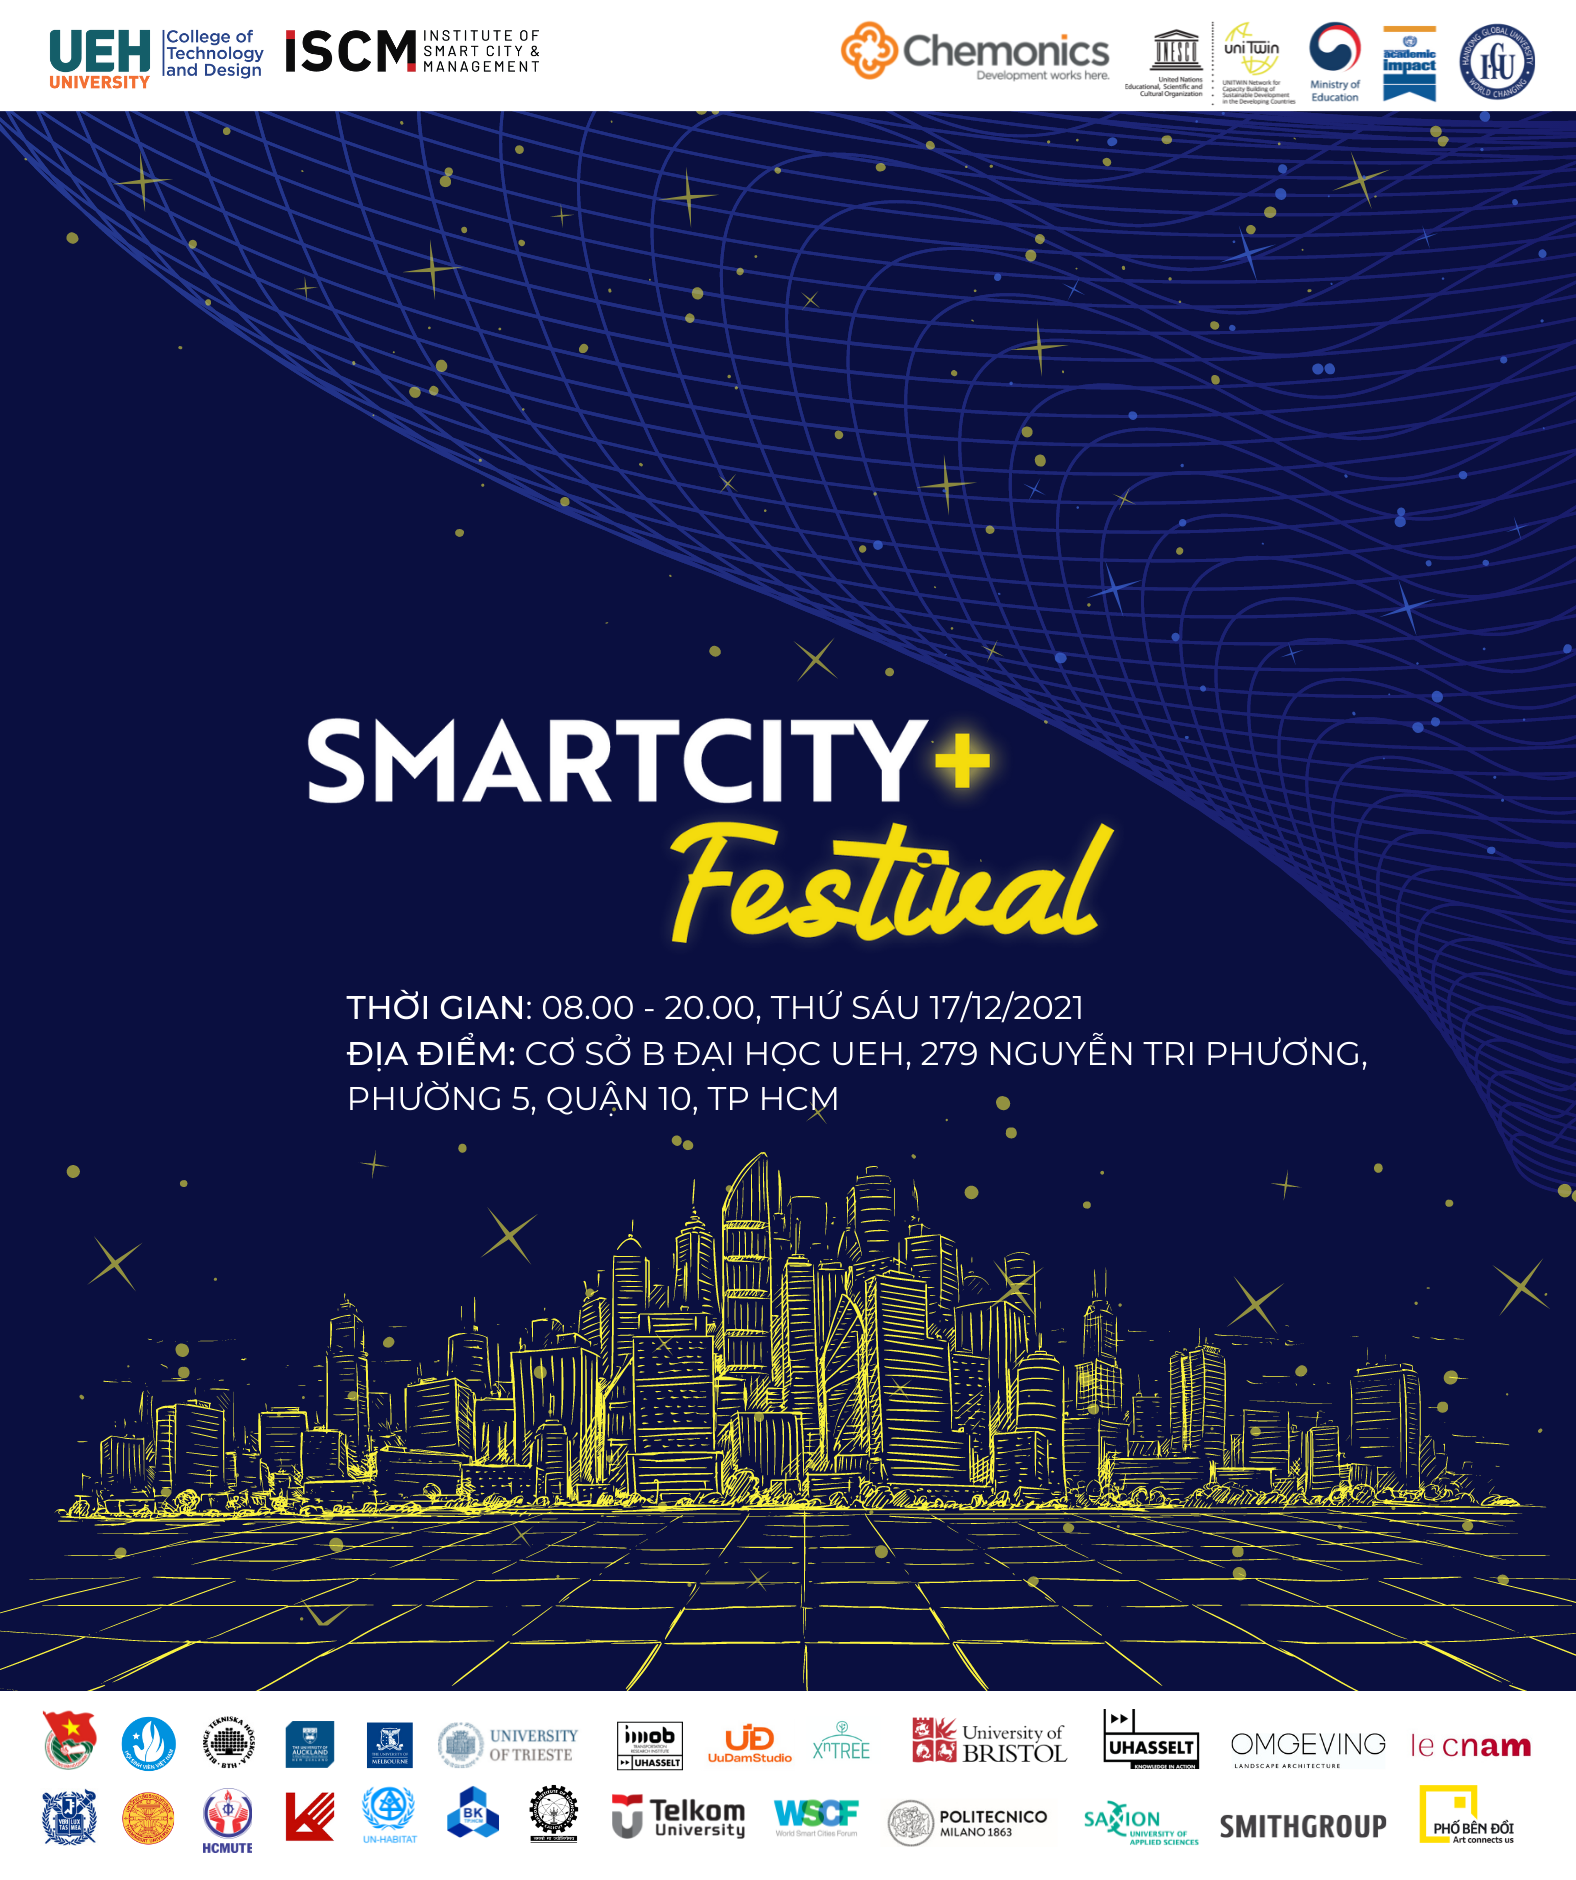 SmartCity+ Festival 2021